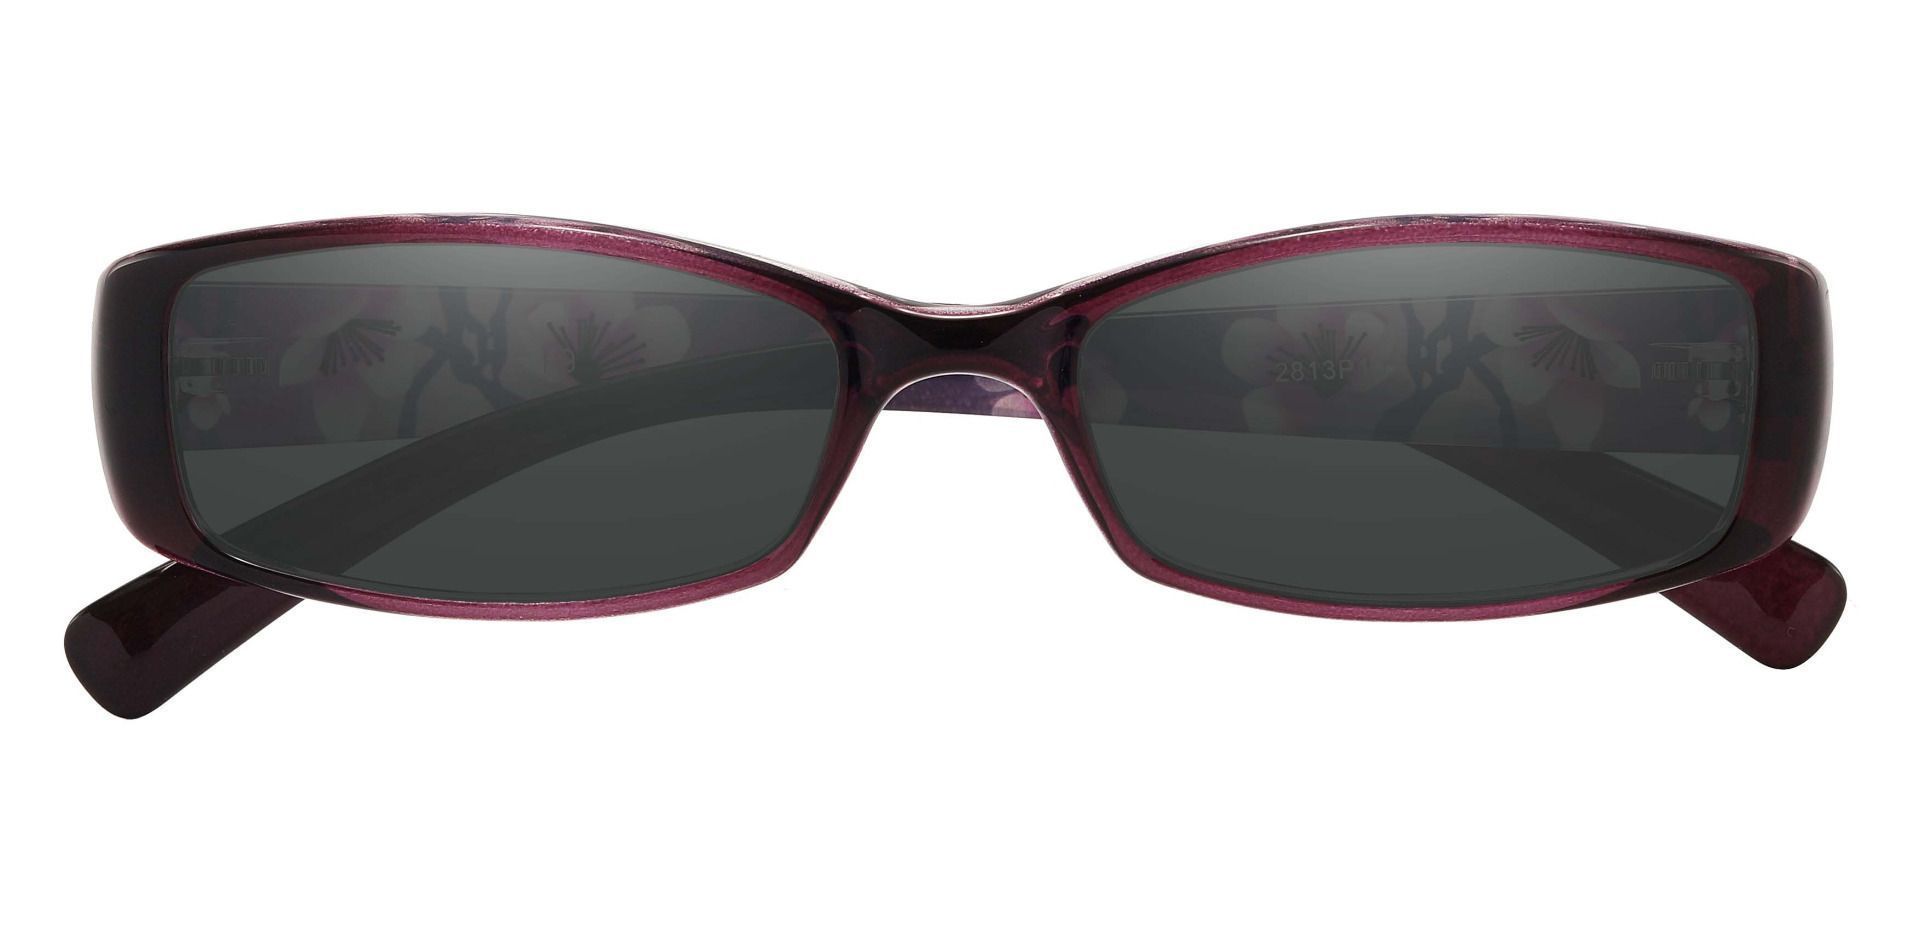 Medora Rectangle Single Vision Sunglasses - Purple Frame With Gray Lenses